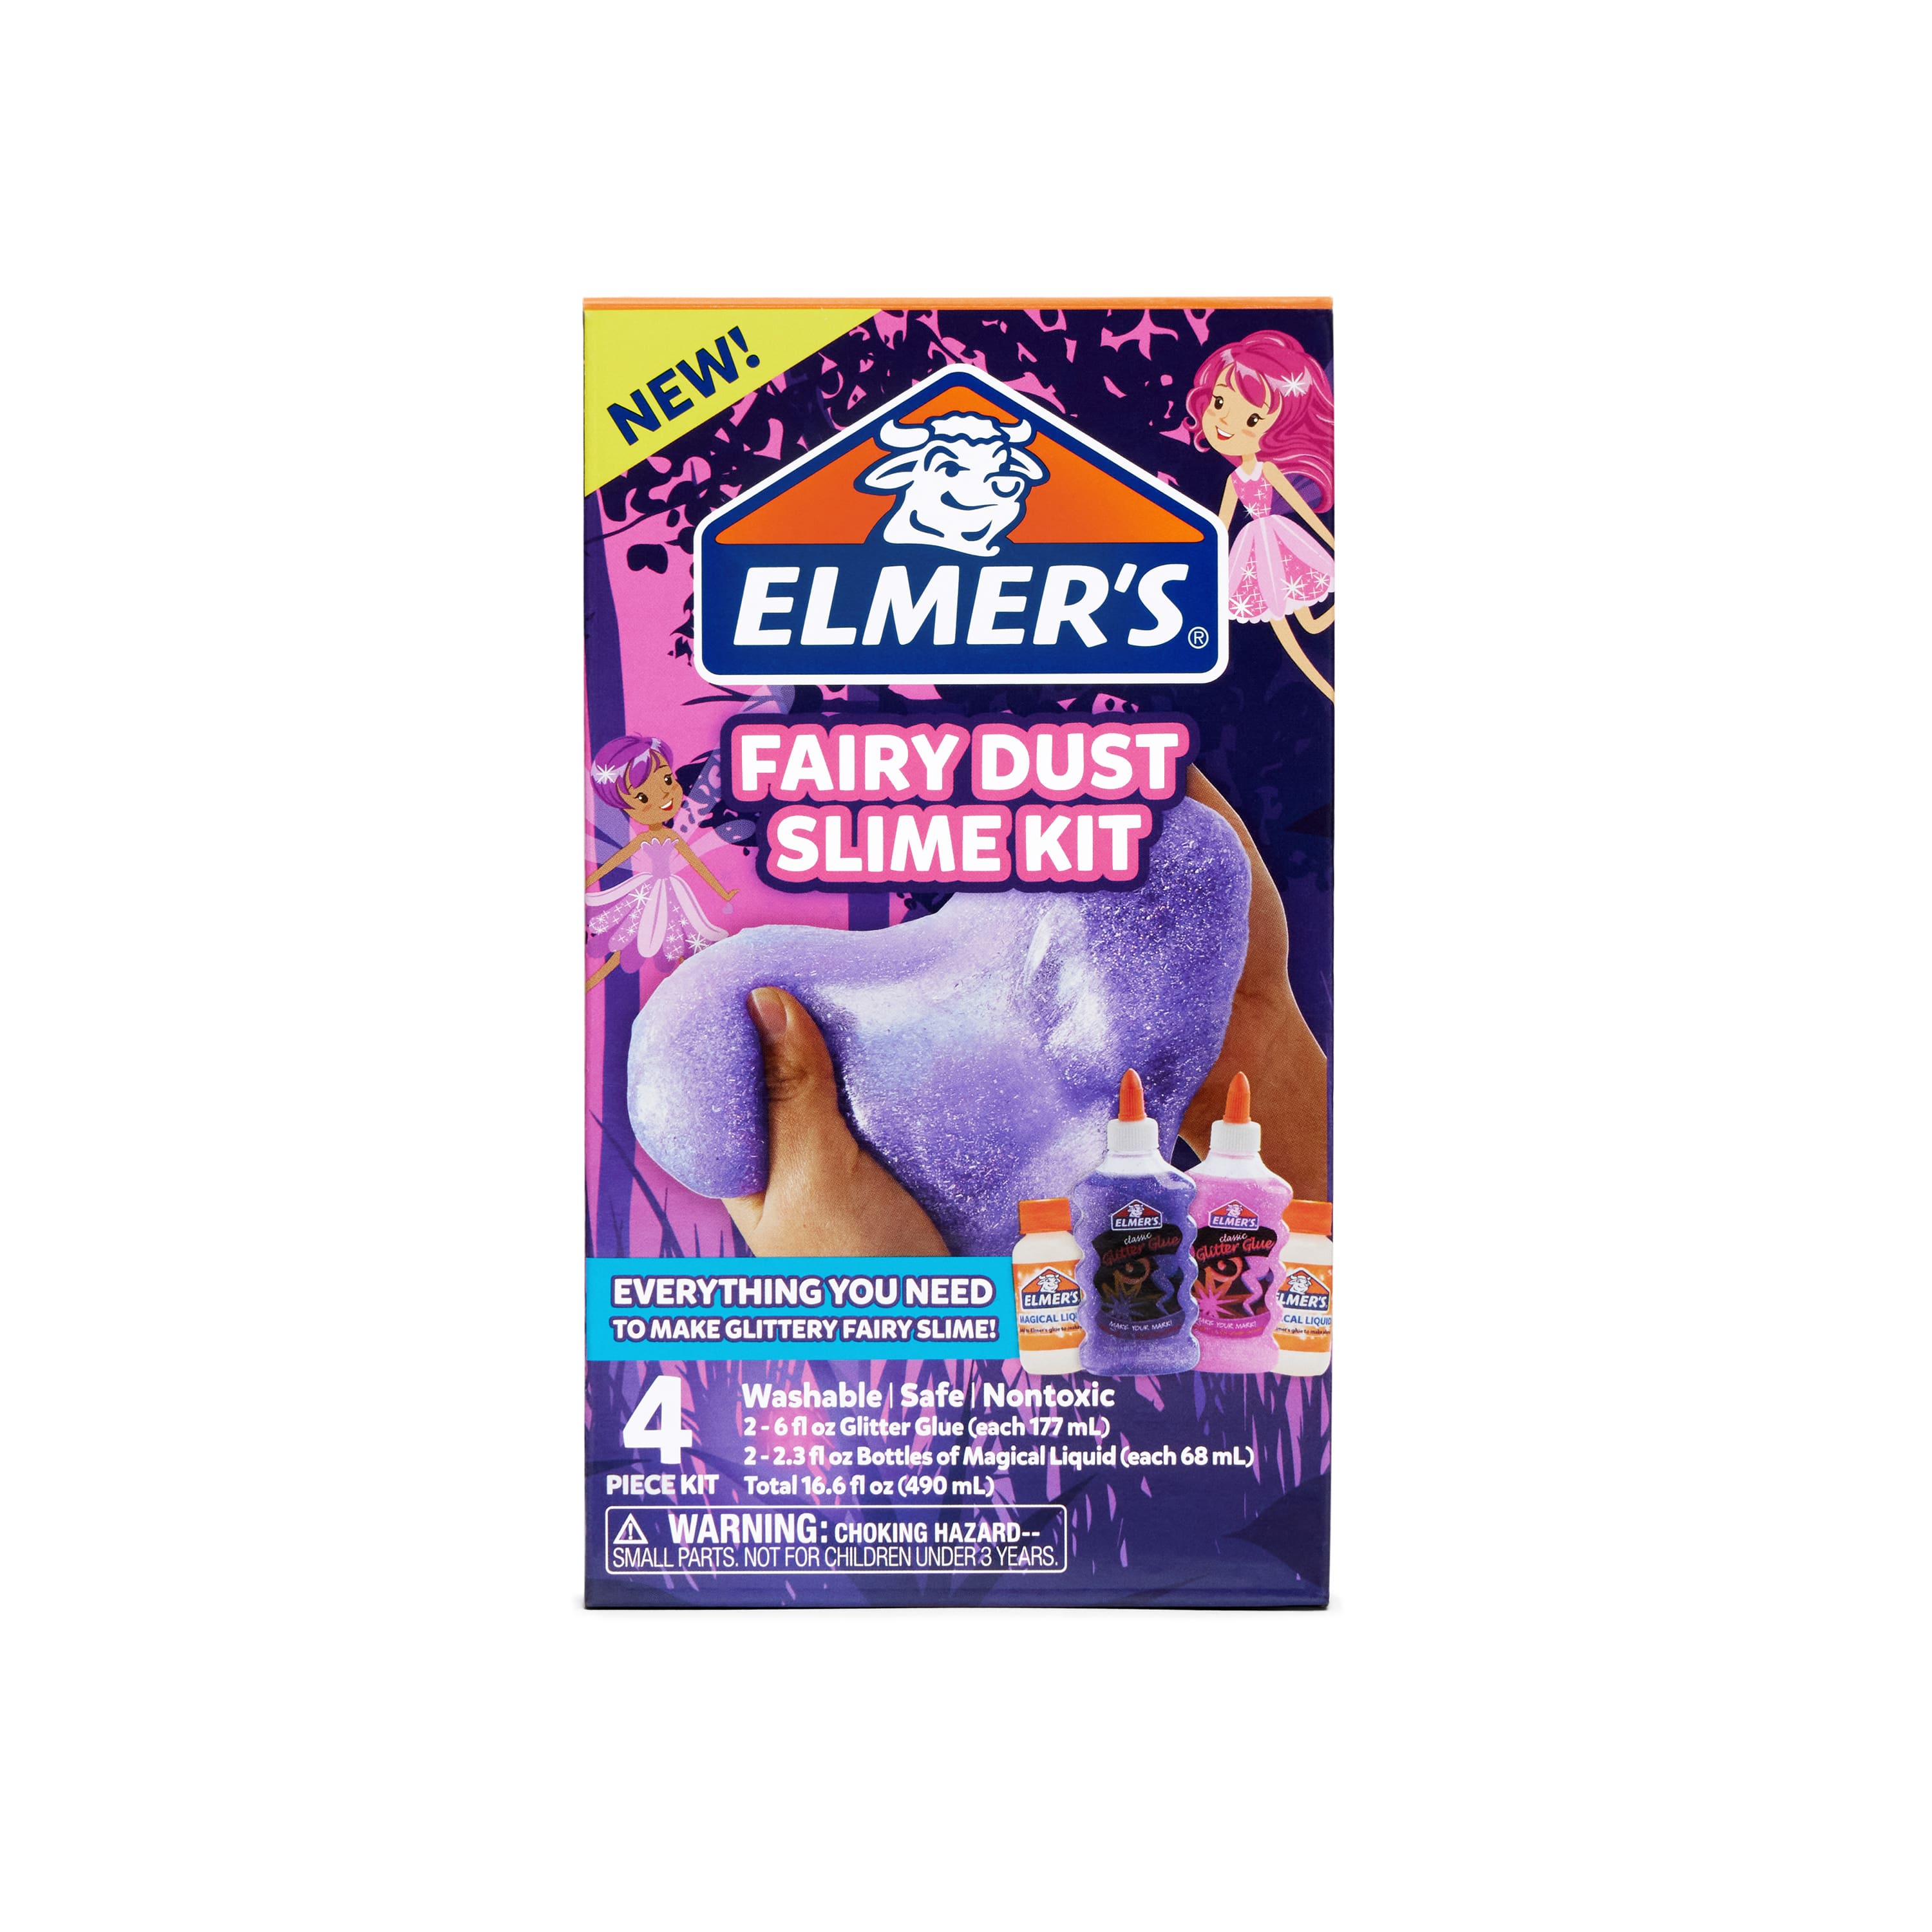 2 Slim Time Slime Kits Includes Glue and Glitter & Glitter Pens